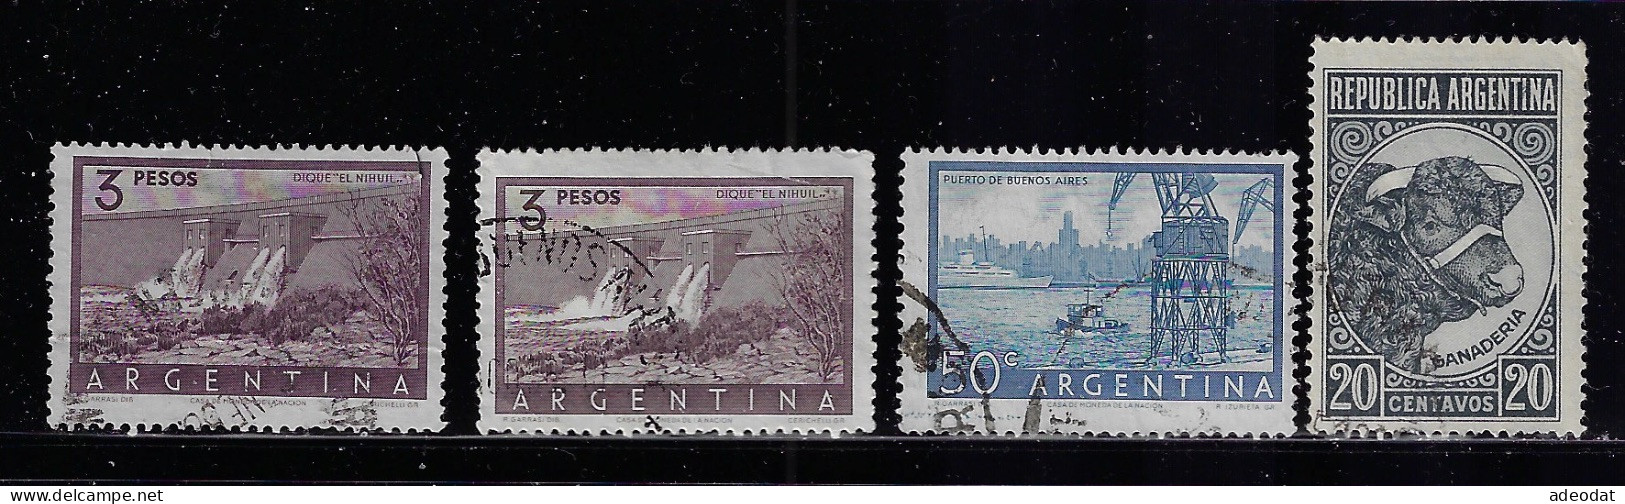 ARGENTINA  1954  SCOTT #632,638(2)  USED - Gebruikt